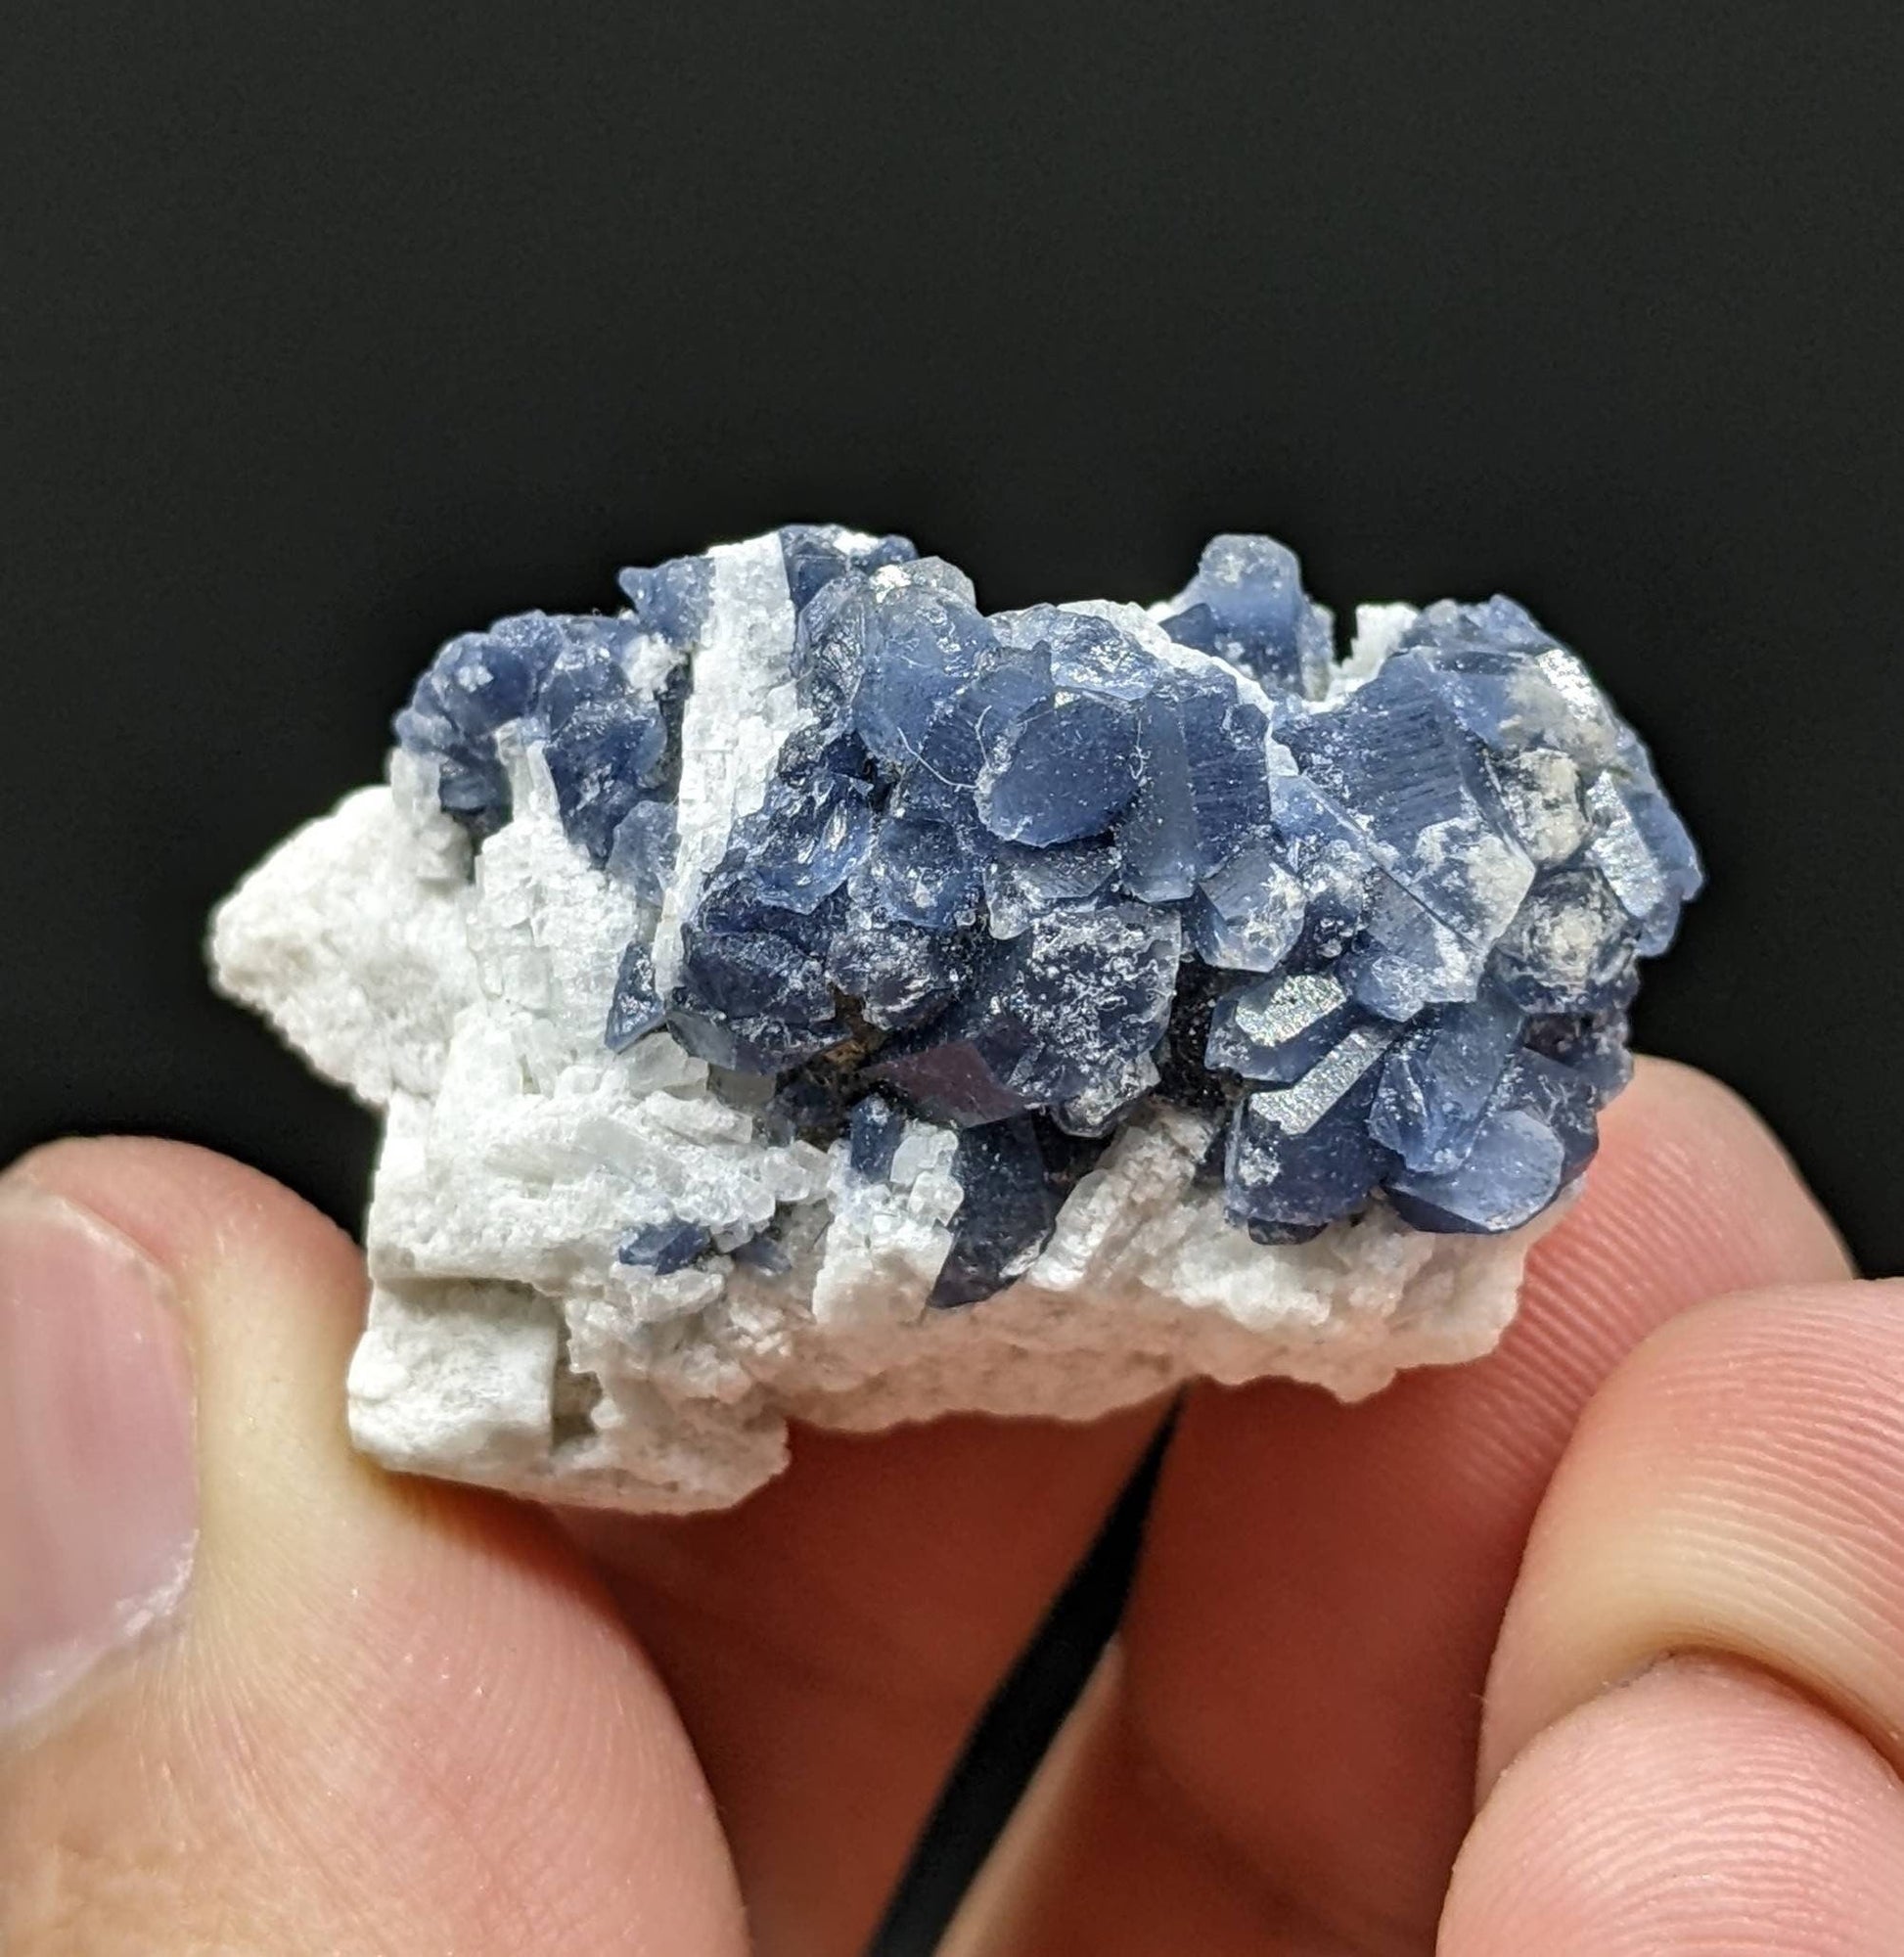 ARSAA GEMS AND MINERALSNatural rare indicolite blue quartz crystals on matrix on albite from Afghanistan, 20 grams - Premium  from ARSAA GEMS AND MINERALS - Just $40.00! Shop now at ARSAA GEMS AND MINERALS